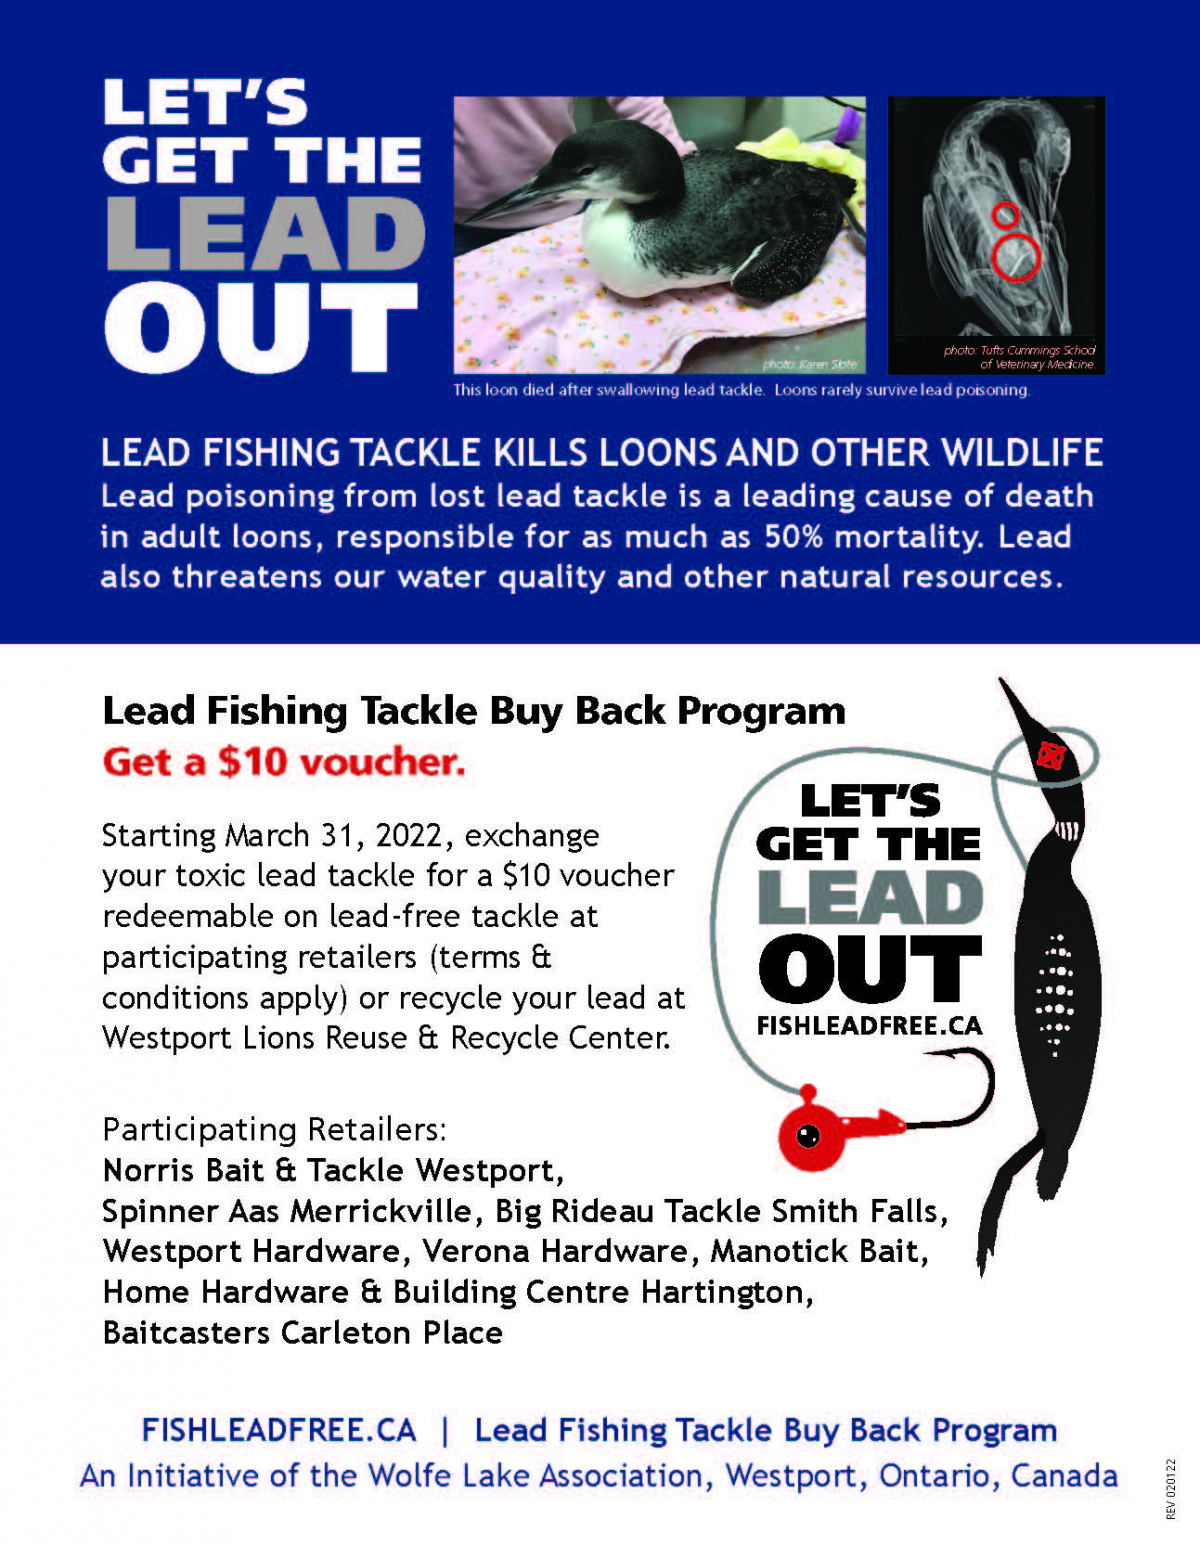 Lead Fishing Tackle Buy-Back Program